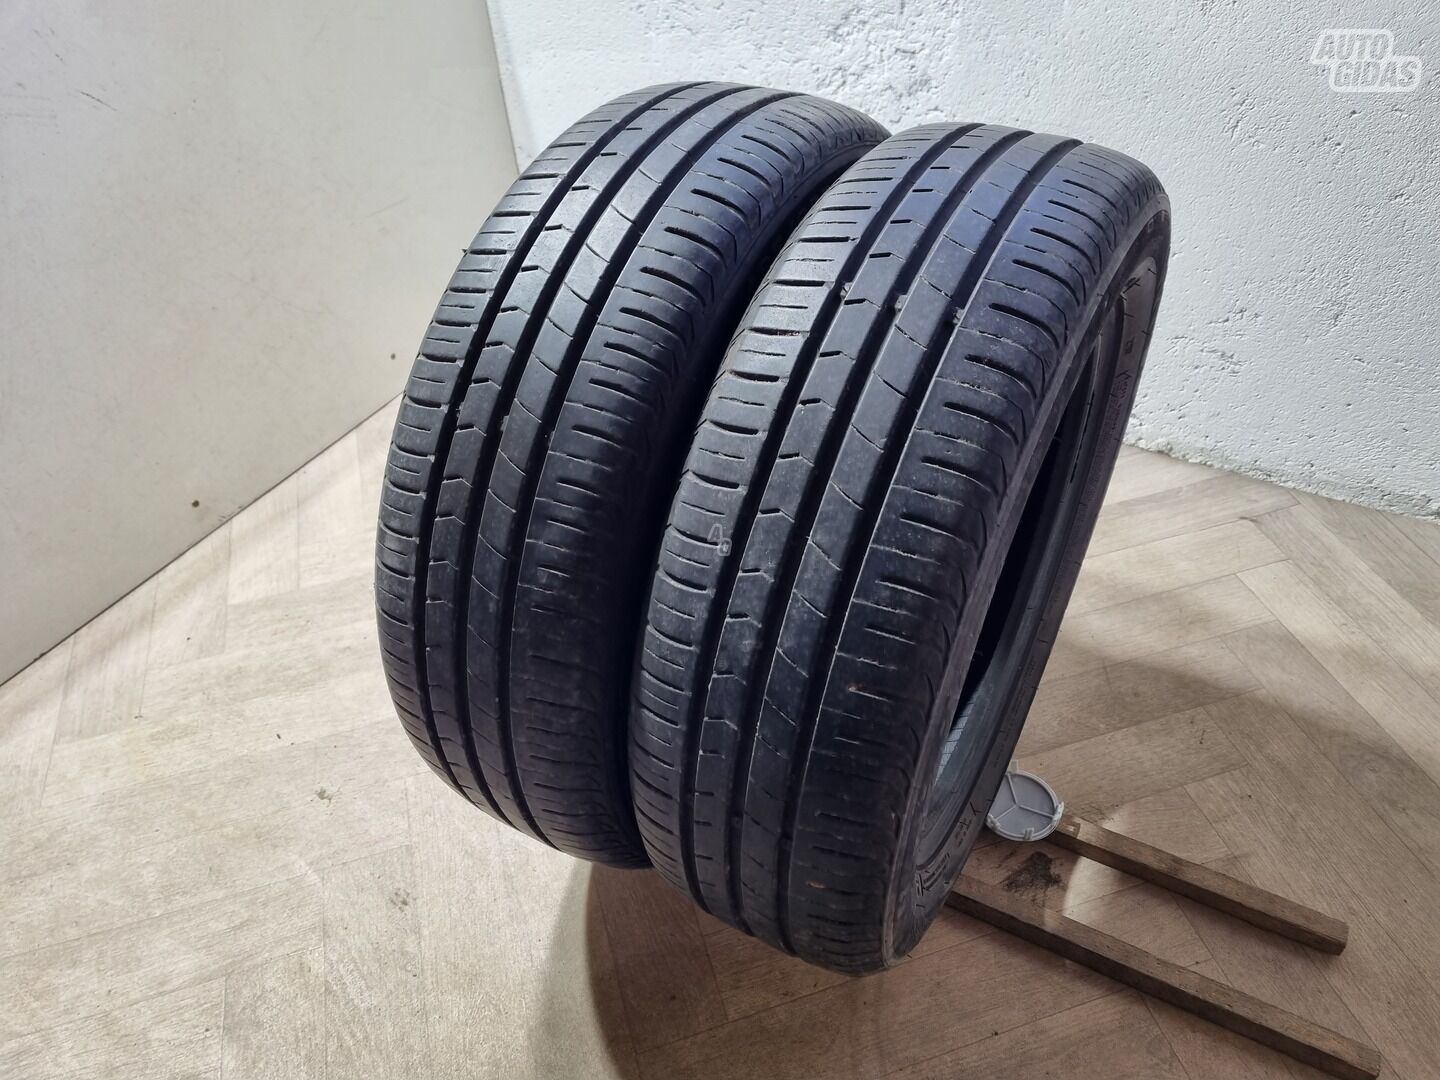 Tracmax 6mm, 2019m R15 summer tyres passanger car